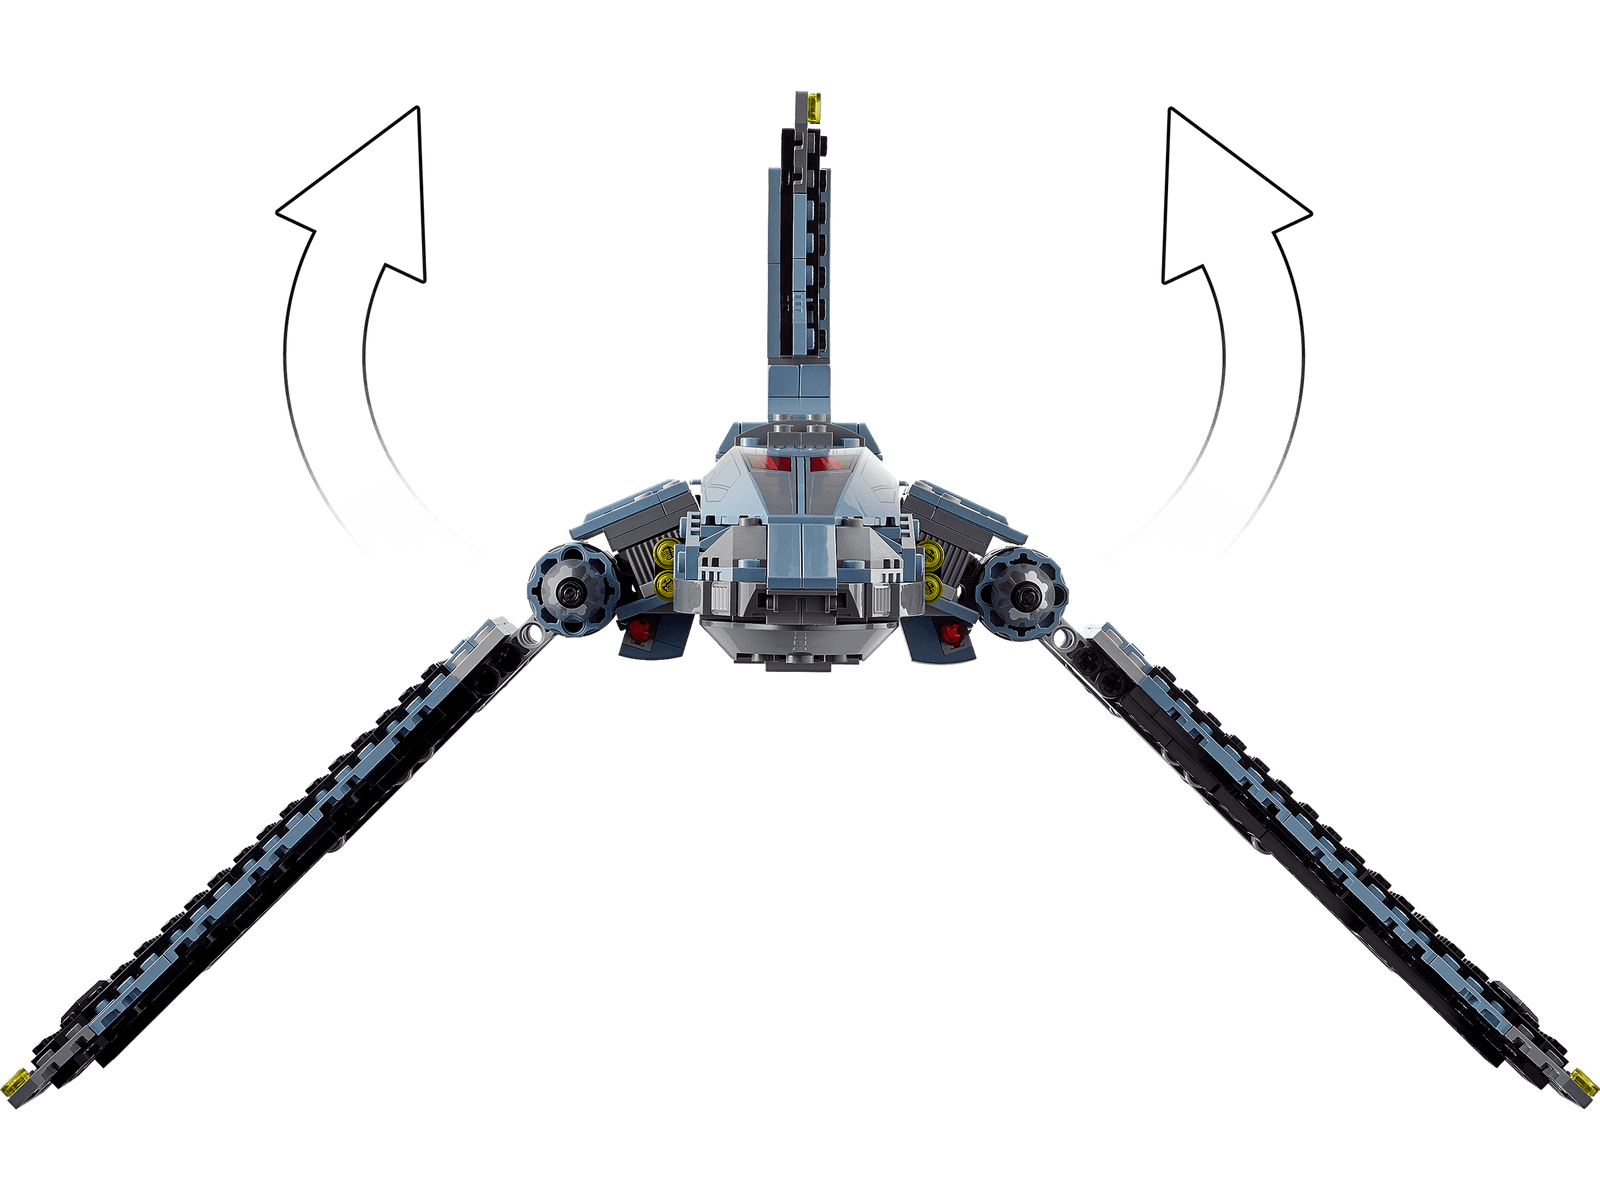 Lego Star Wars The Bad Batch Attack Shuttle 75314